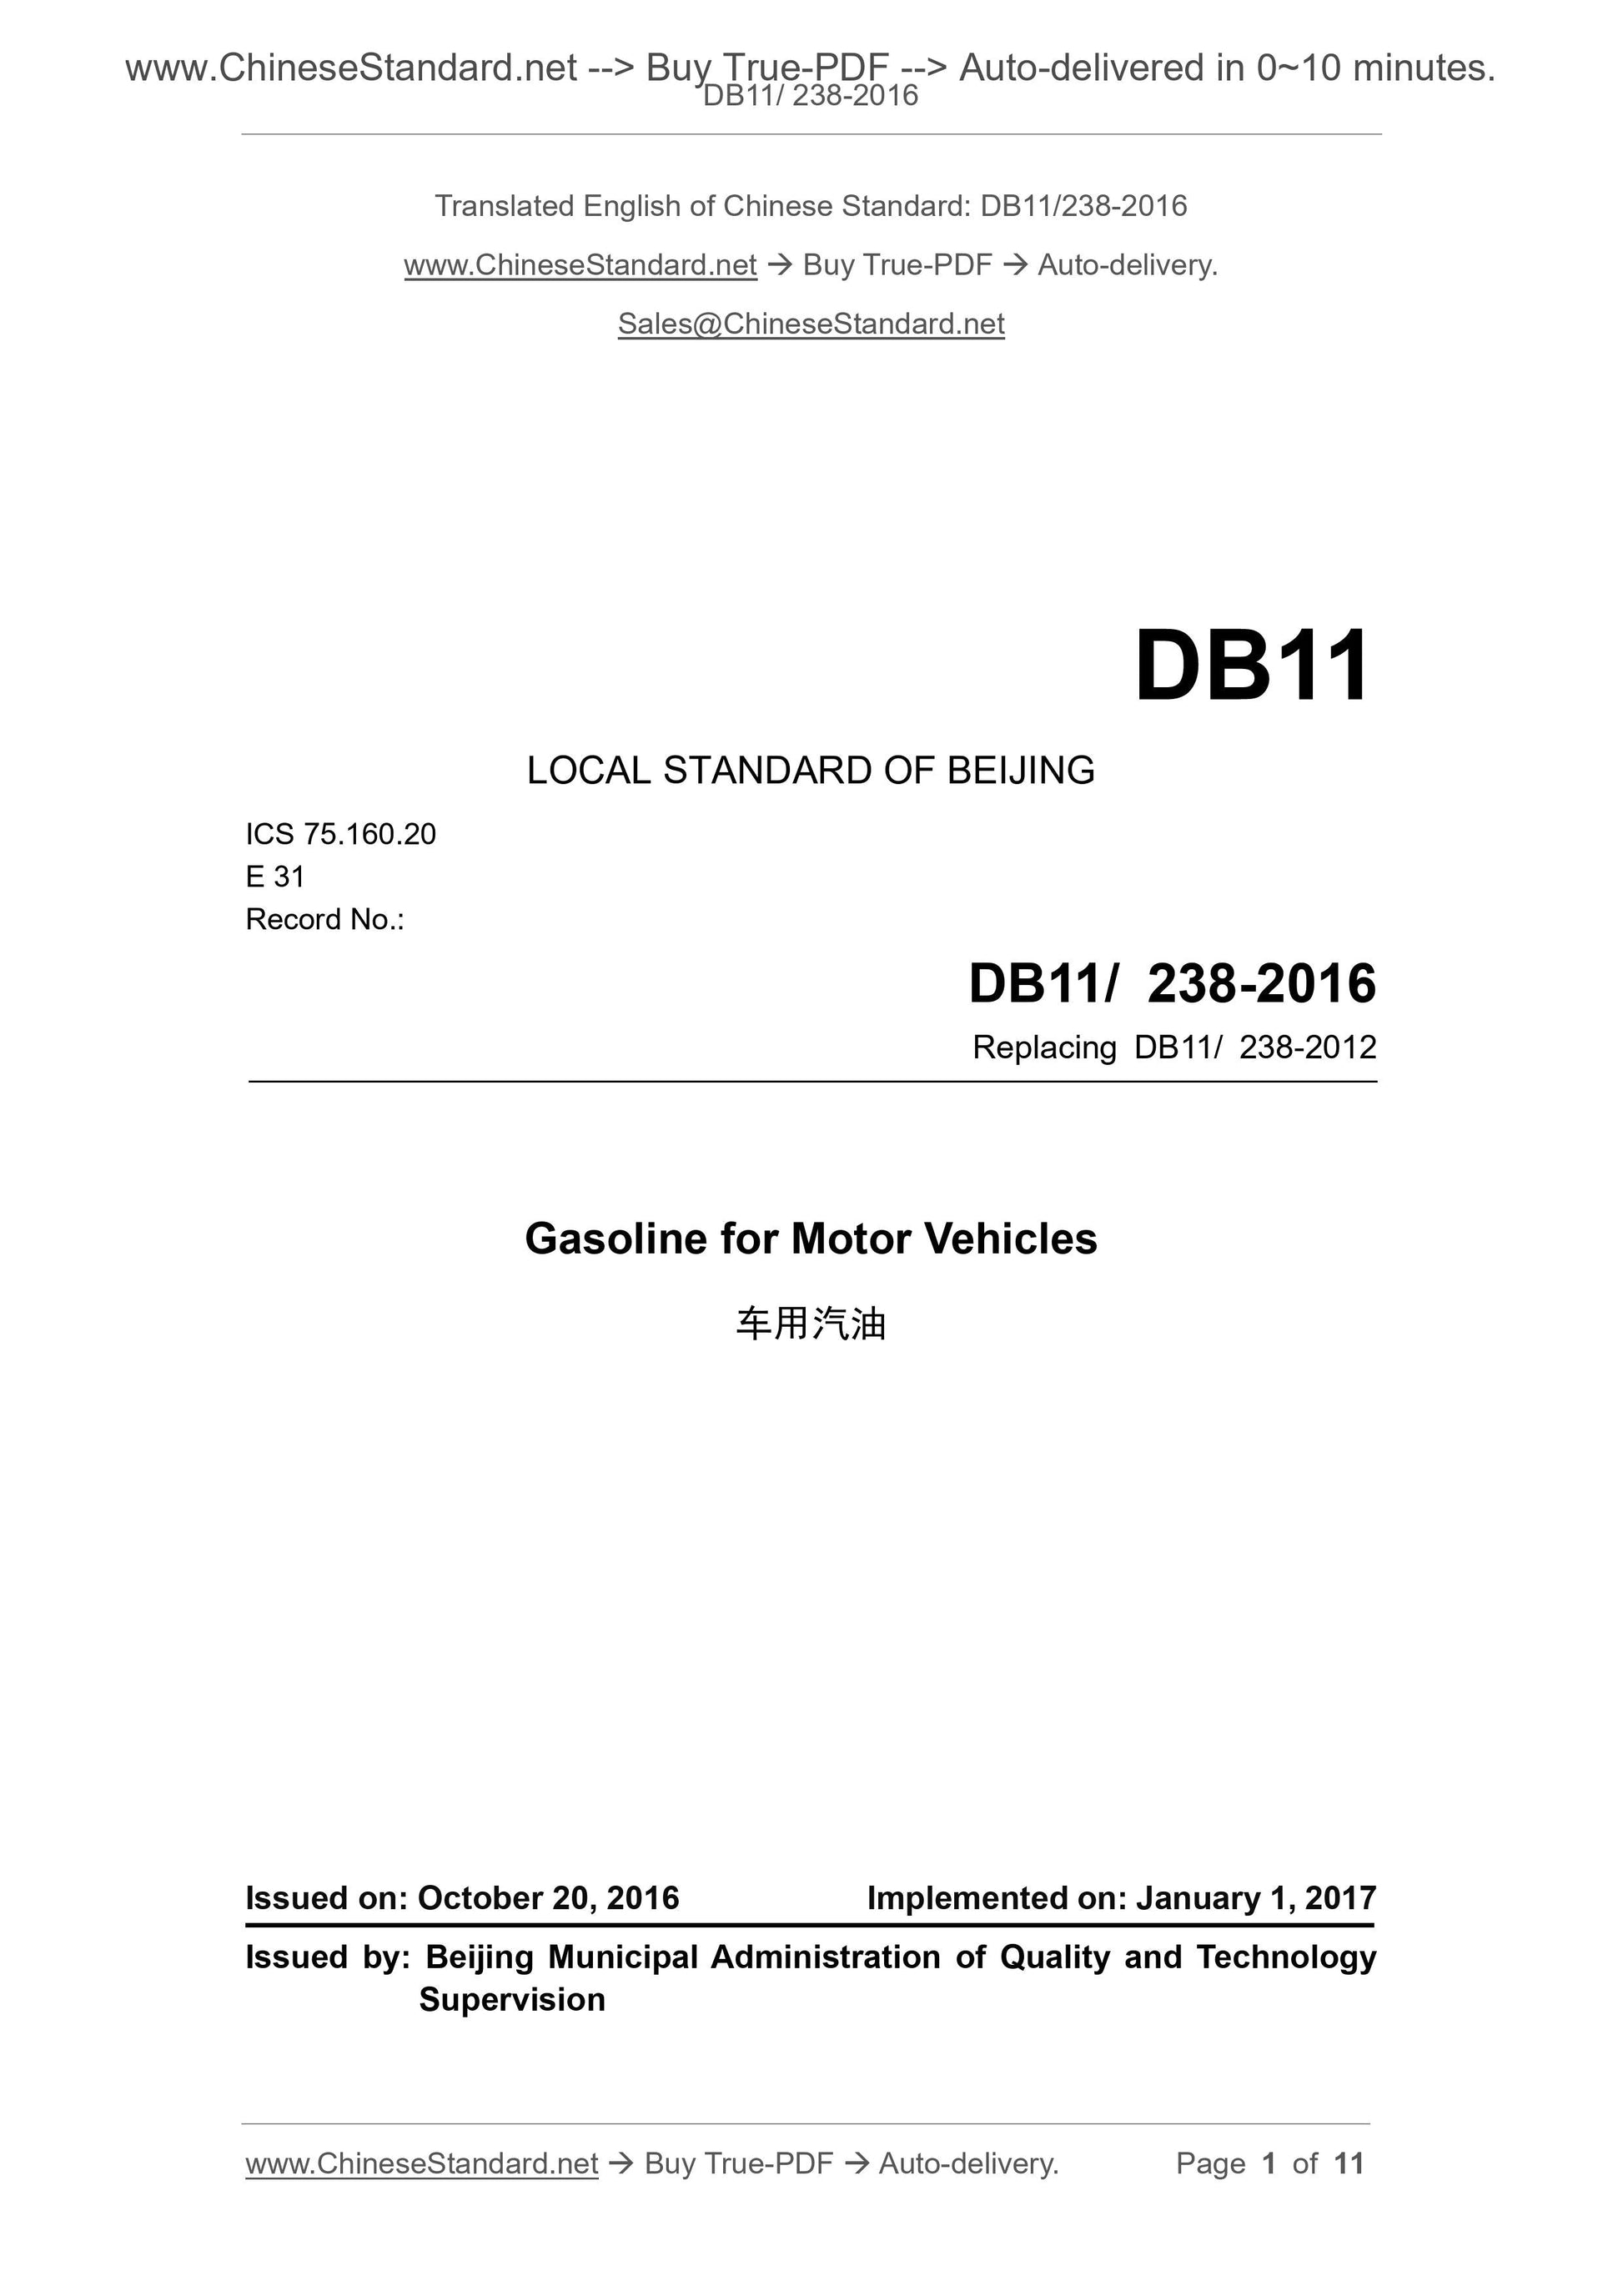 DB11/ 238-2016 Page 1